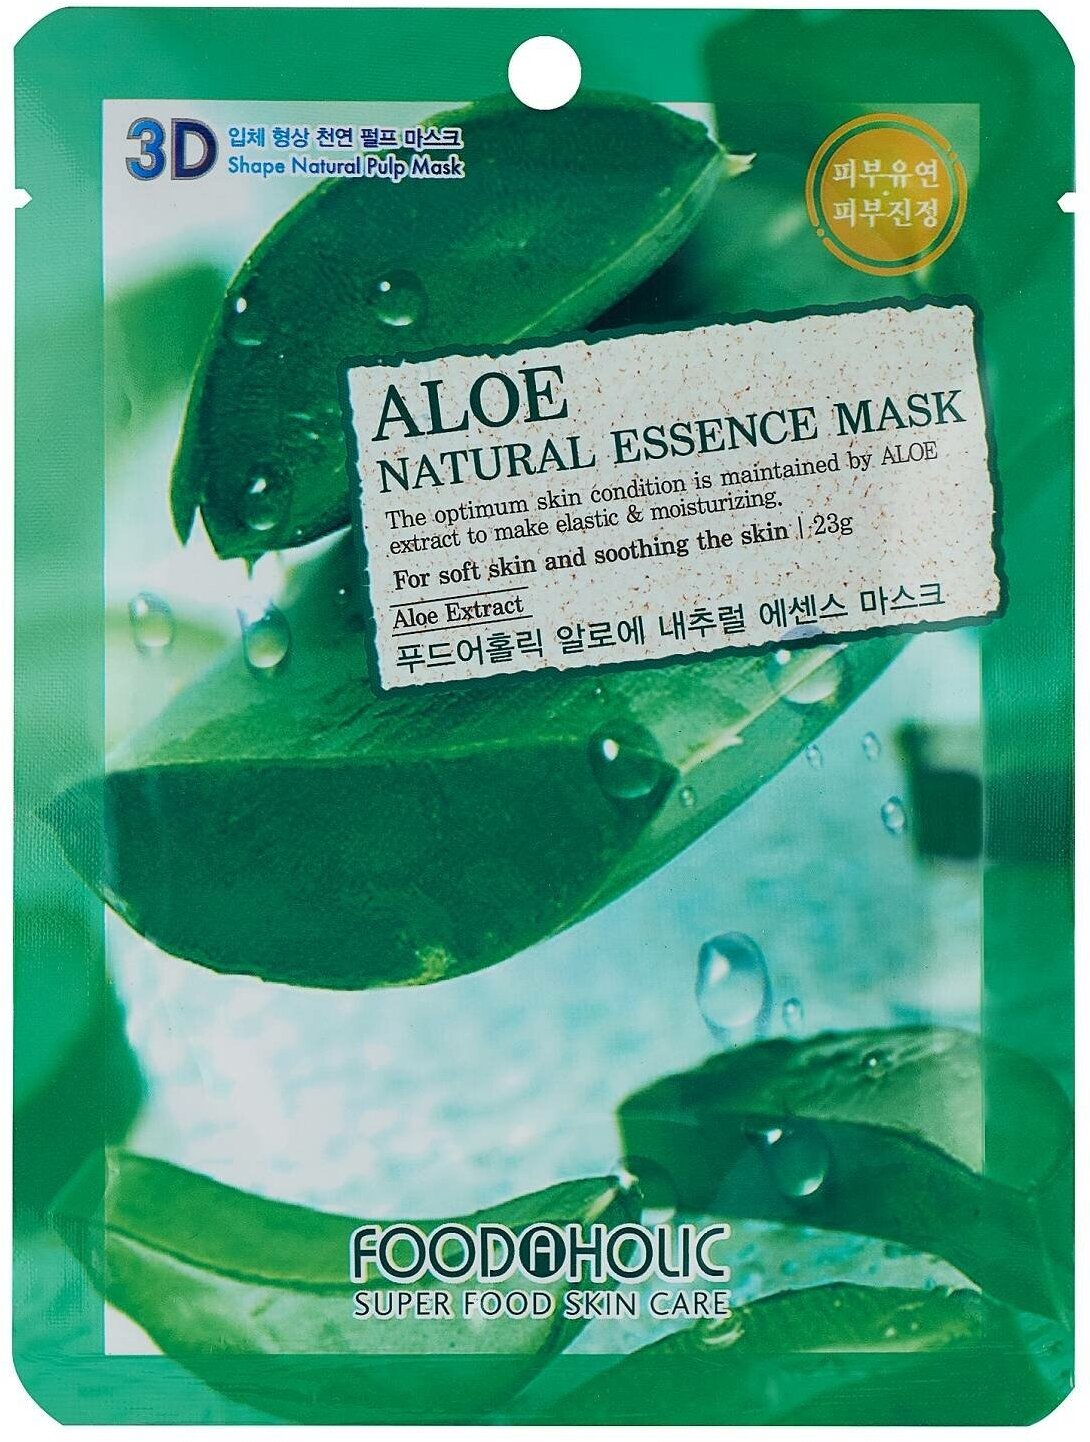 Тканевая 3D маска FOOD A HOLIC с экстрактом алоэ Aloe Natural Essence Mask, 23 г